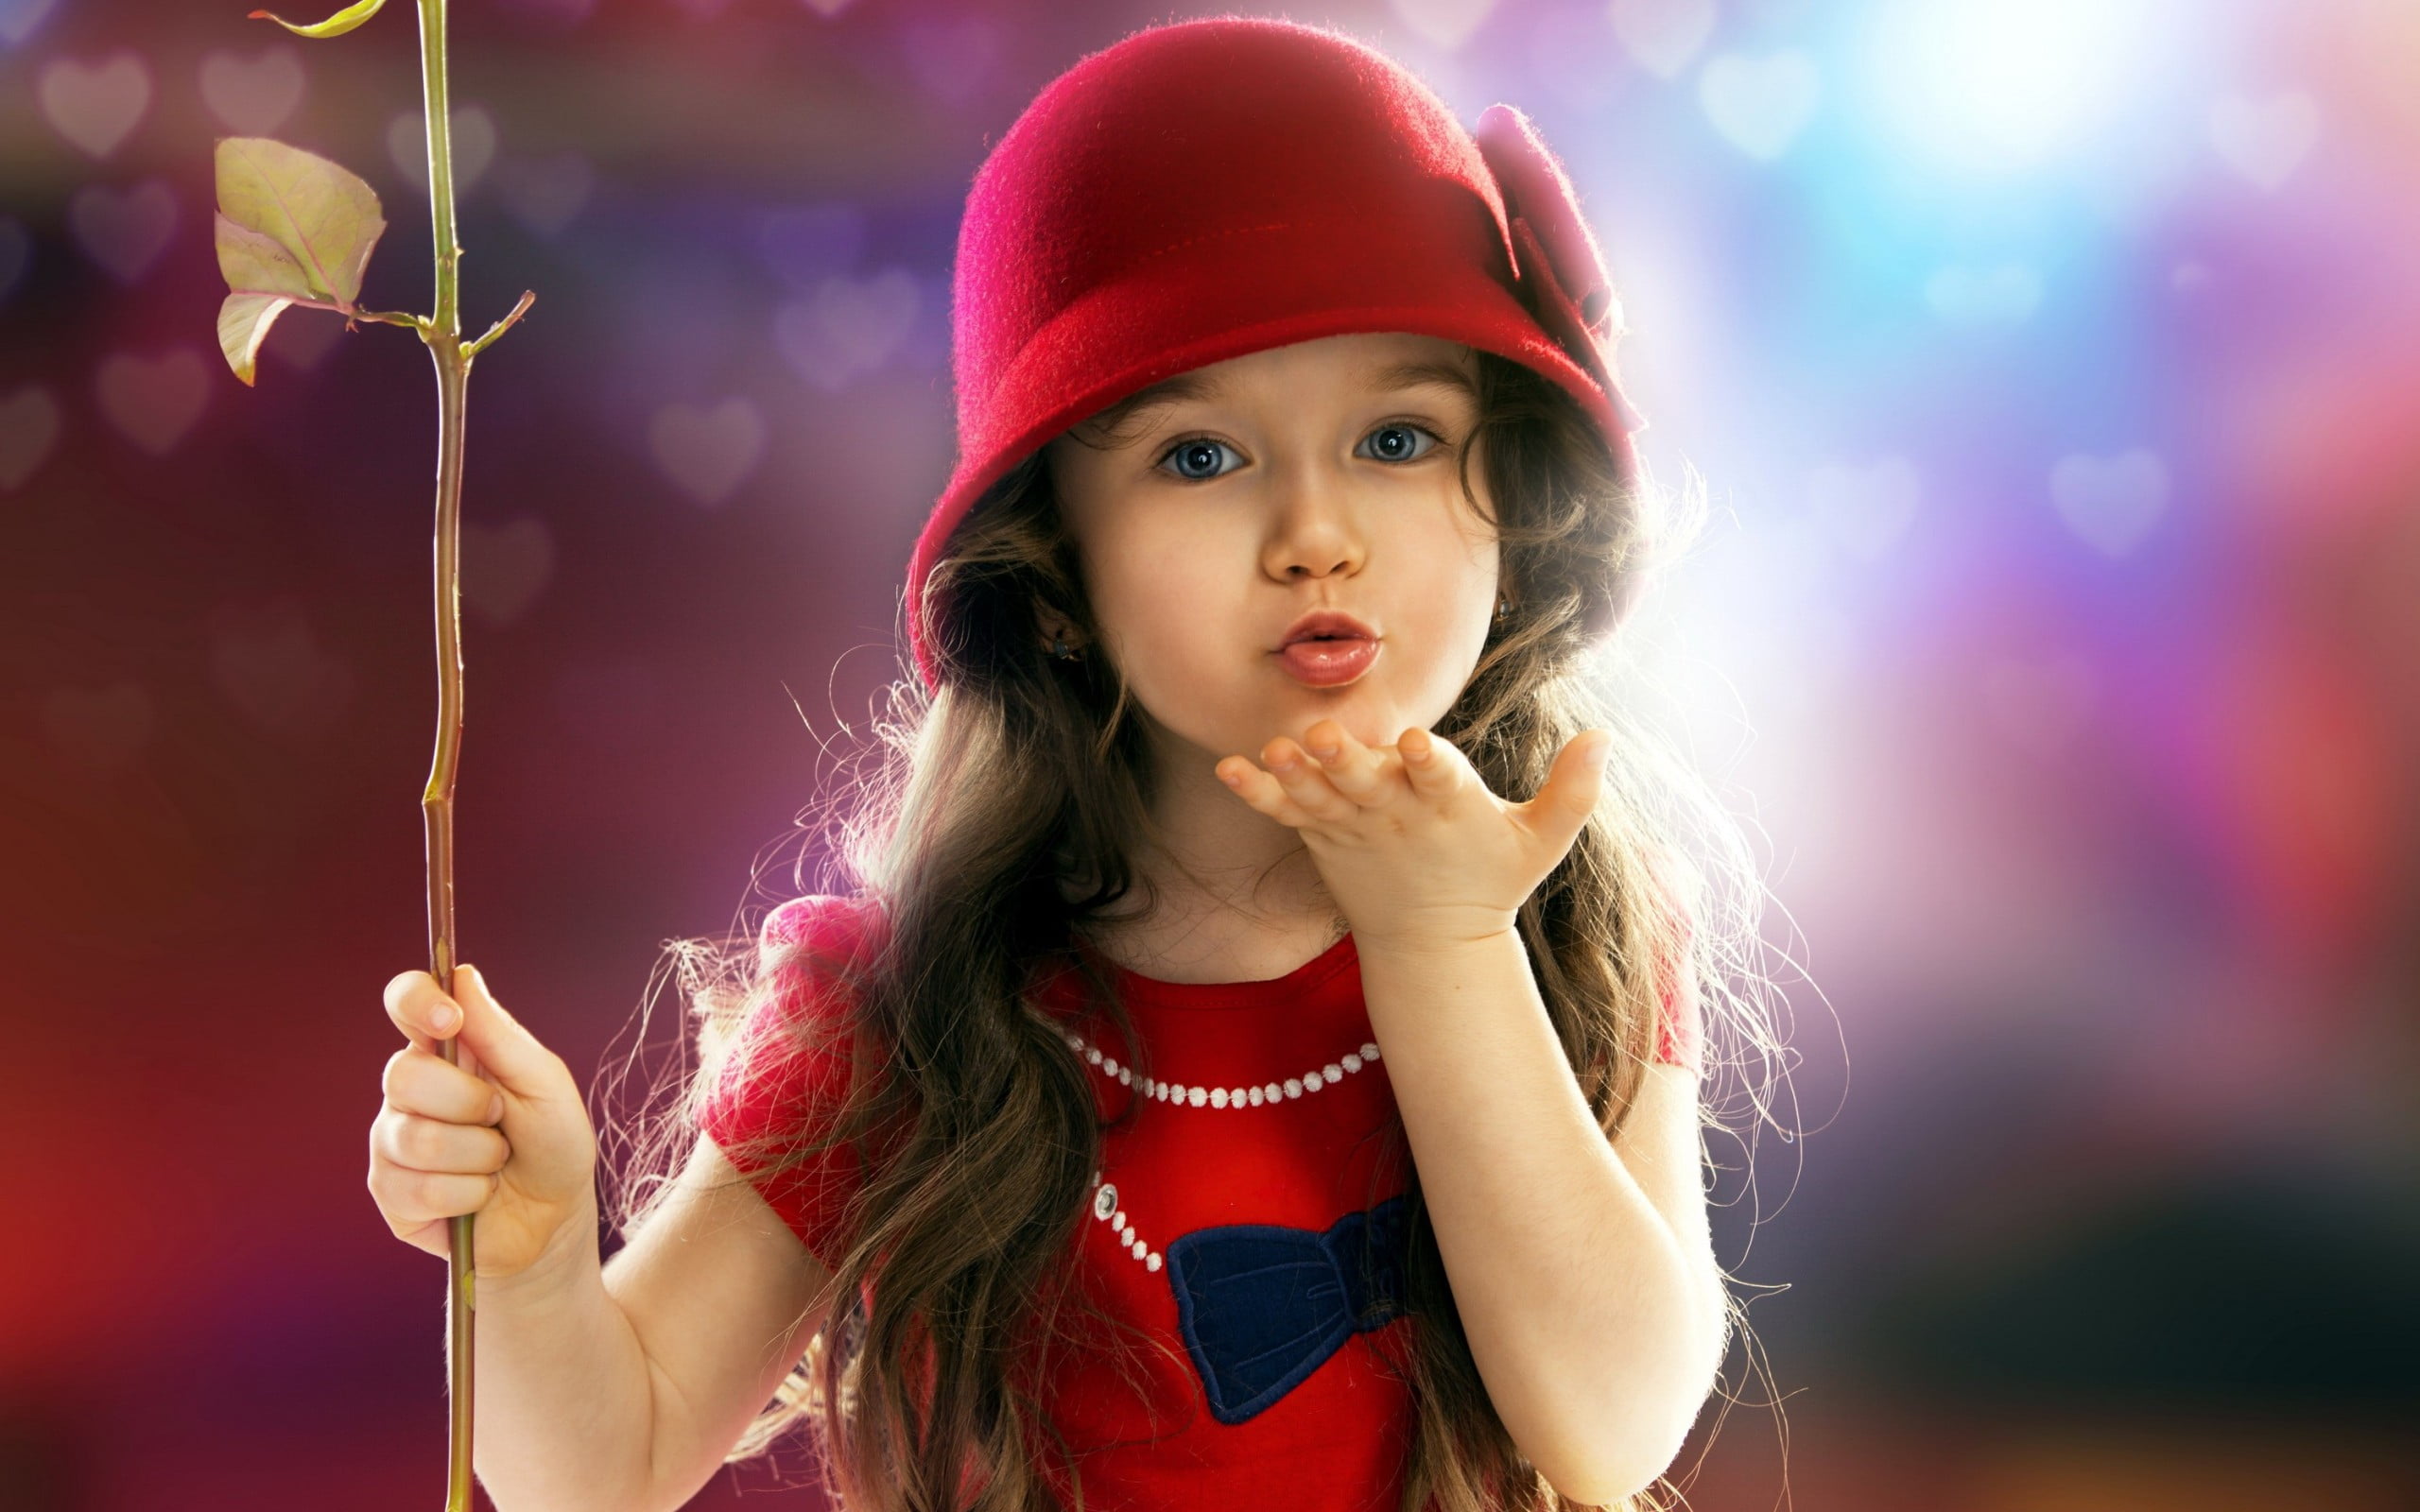 Cute Little Girl Send Kiss, girl's red hat, Baby, rose, portrait